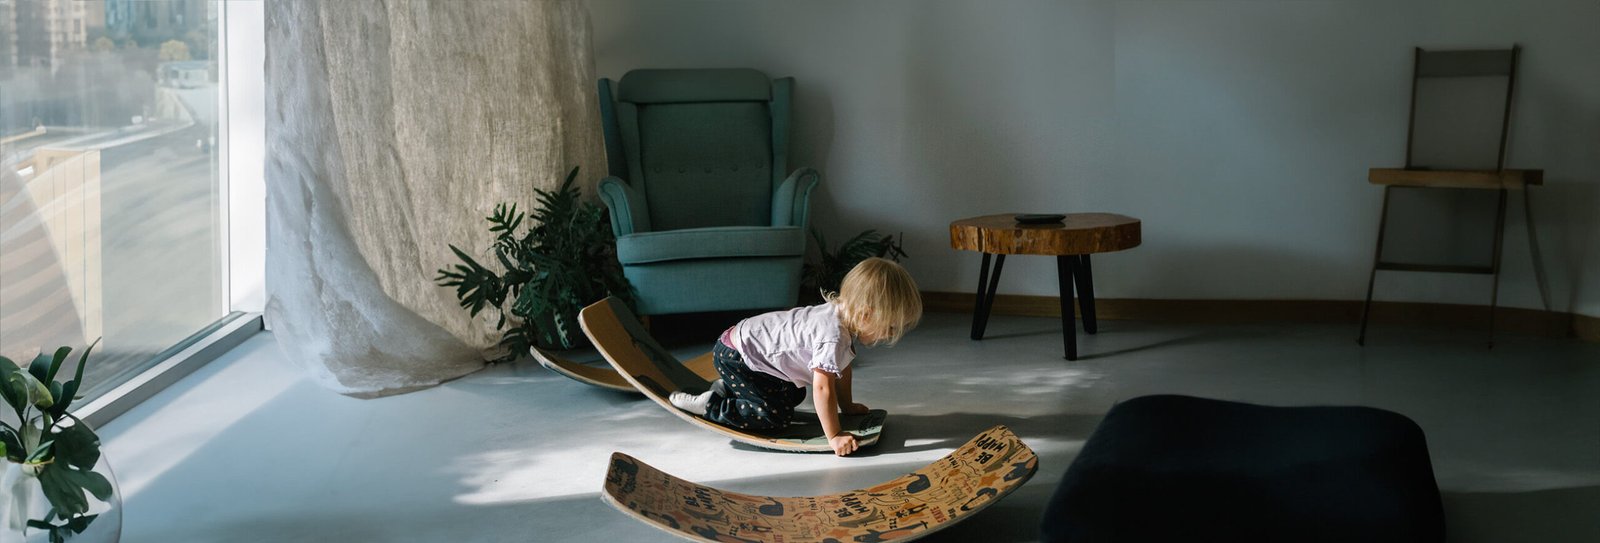 Kids montessori rocker balance board in a flat living room